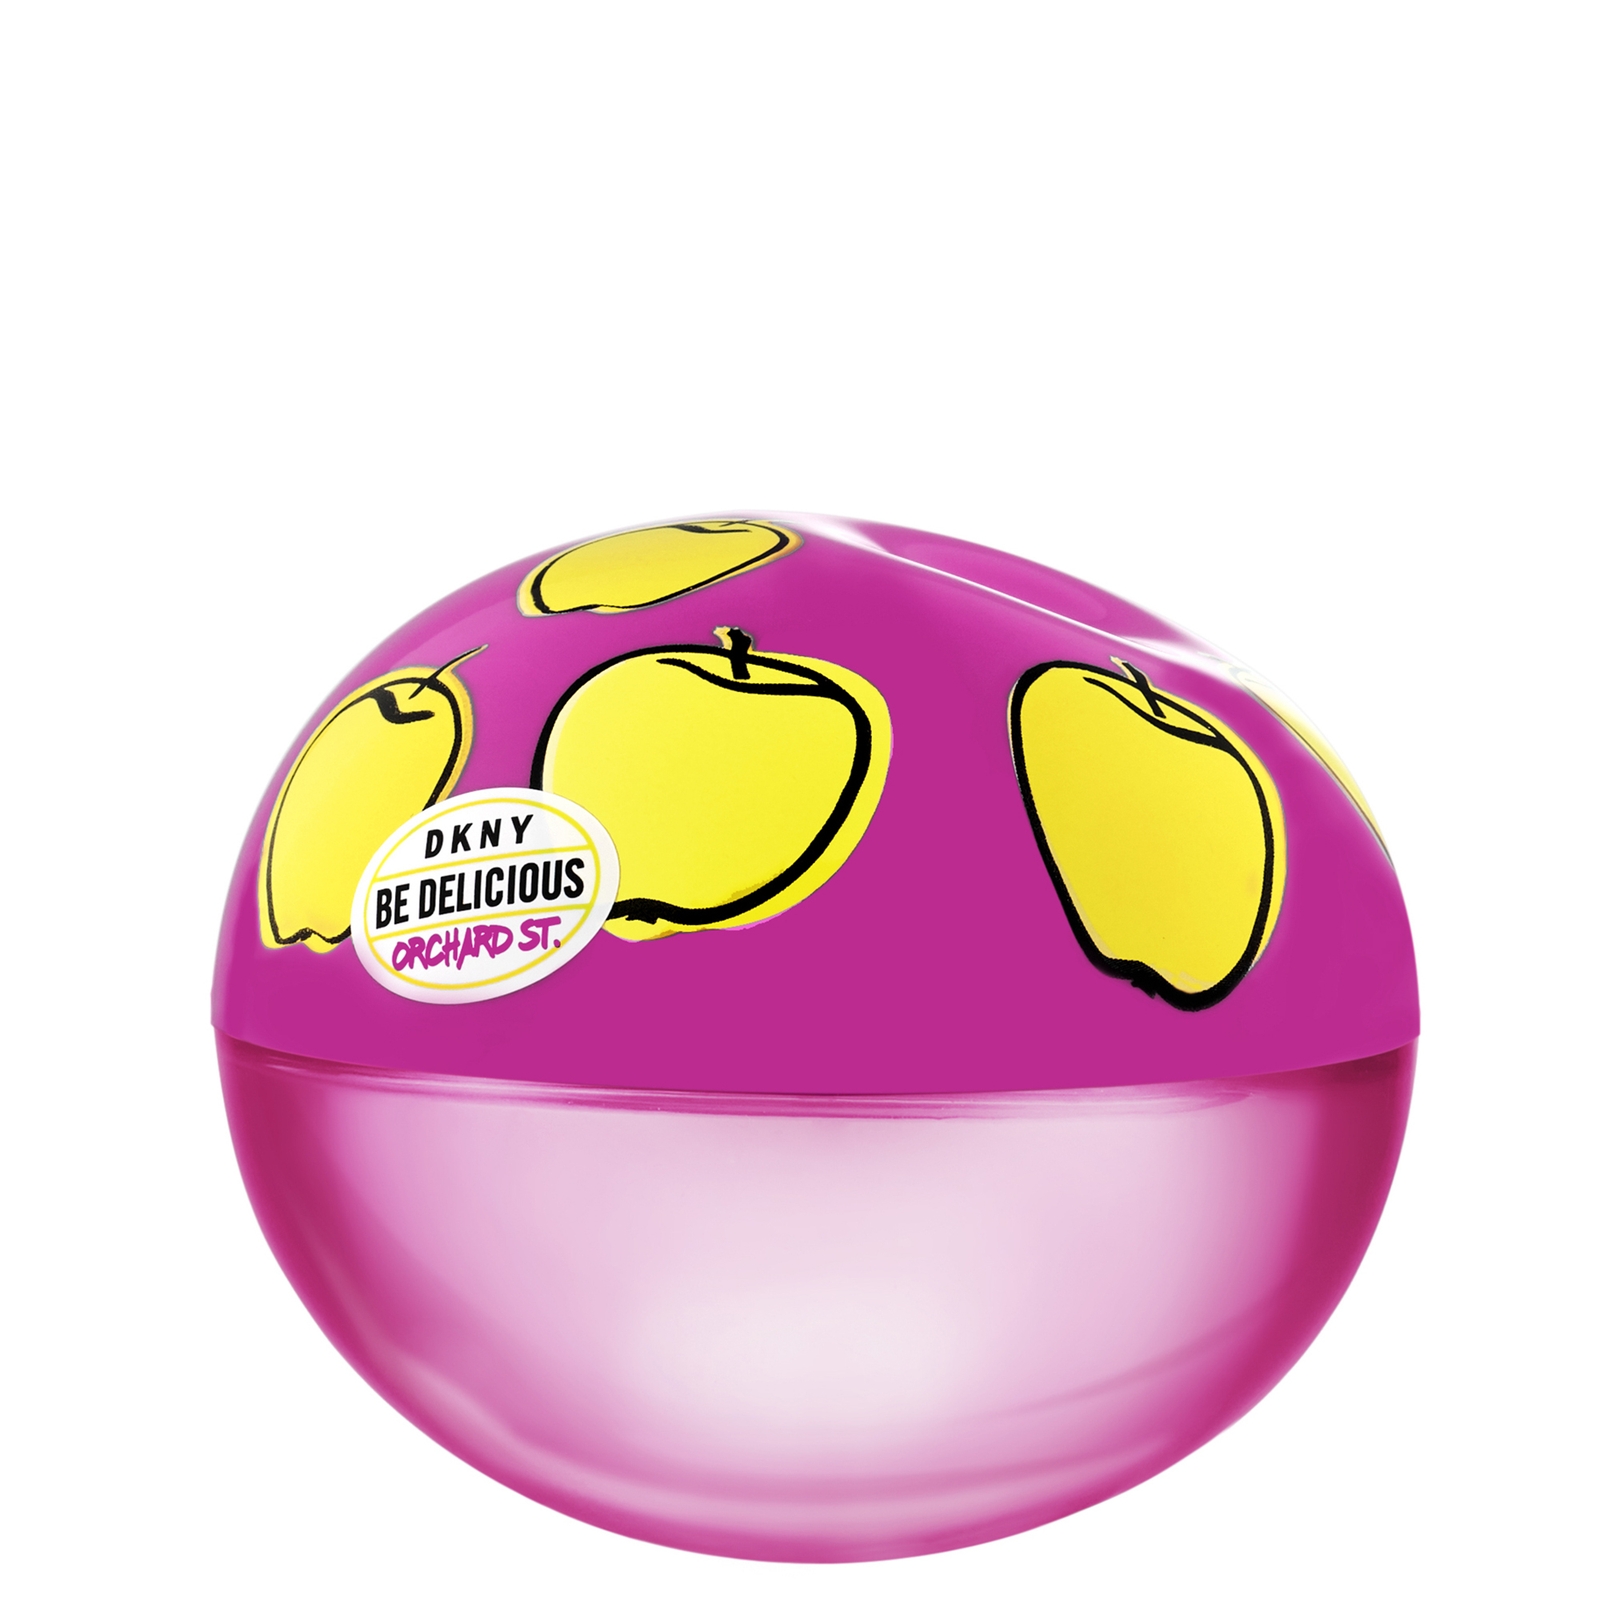 Photos - Women's Fragrance DKNY Be Delicious Orchard Street Eau de Parfum 100ml DK95041 